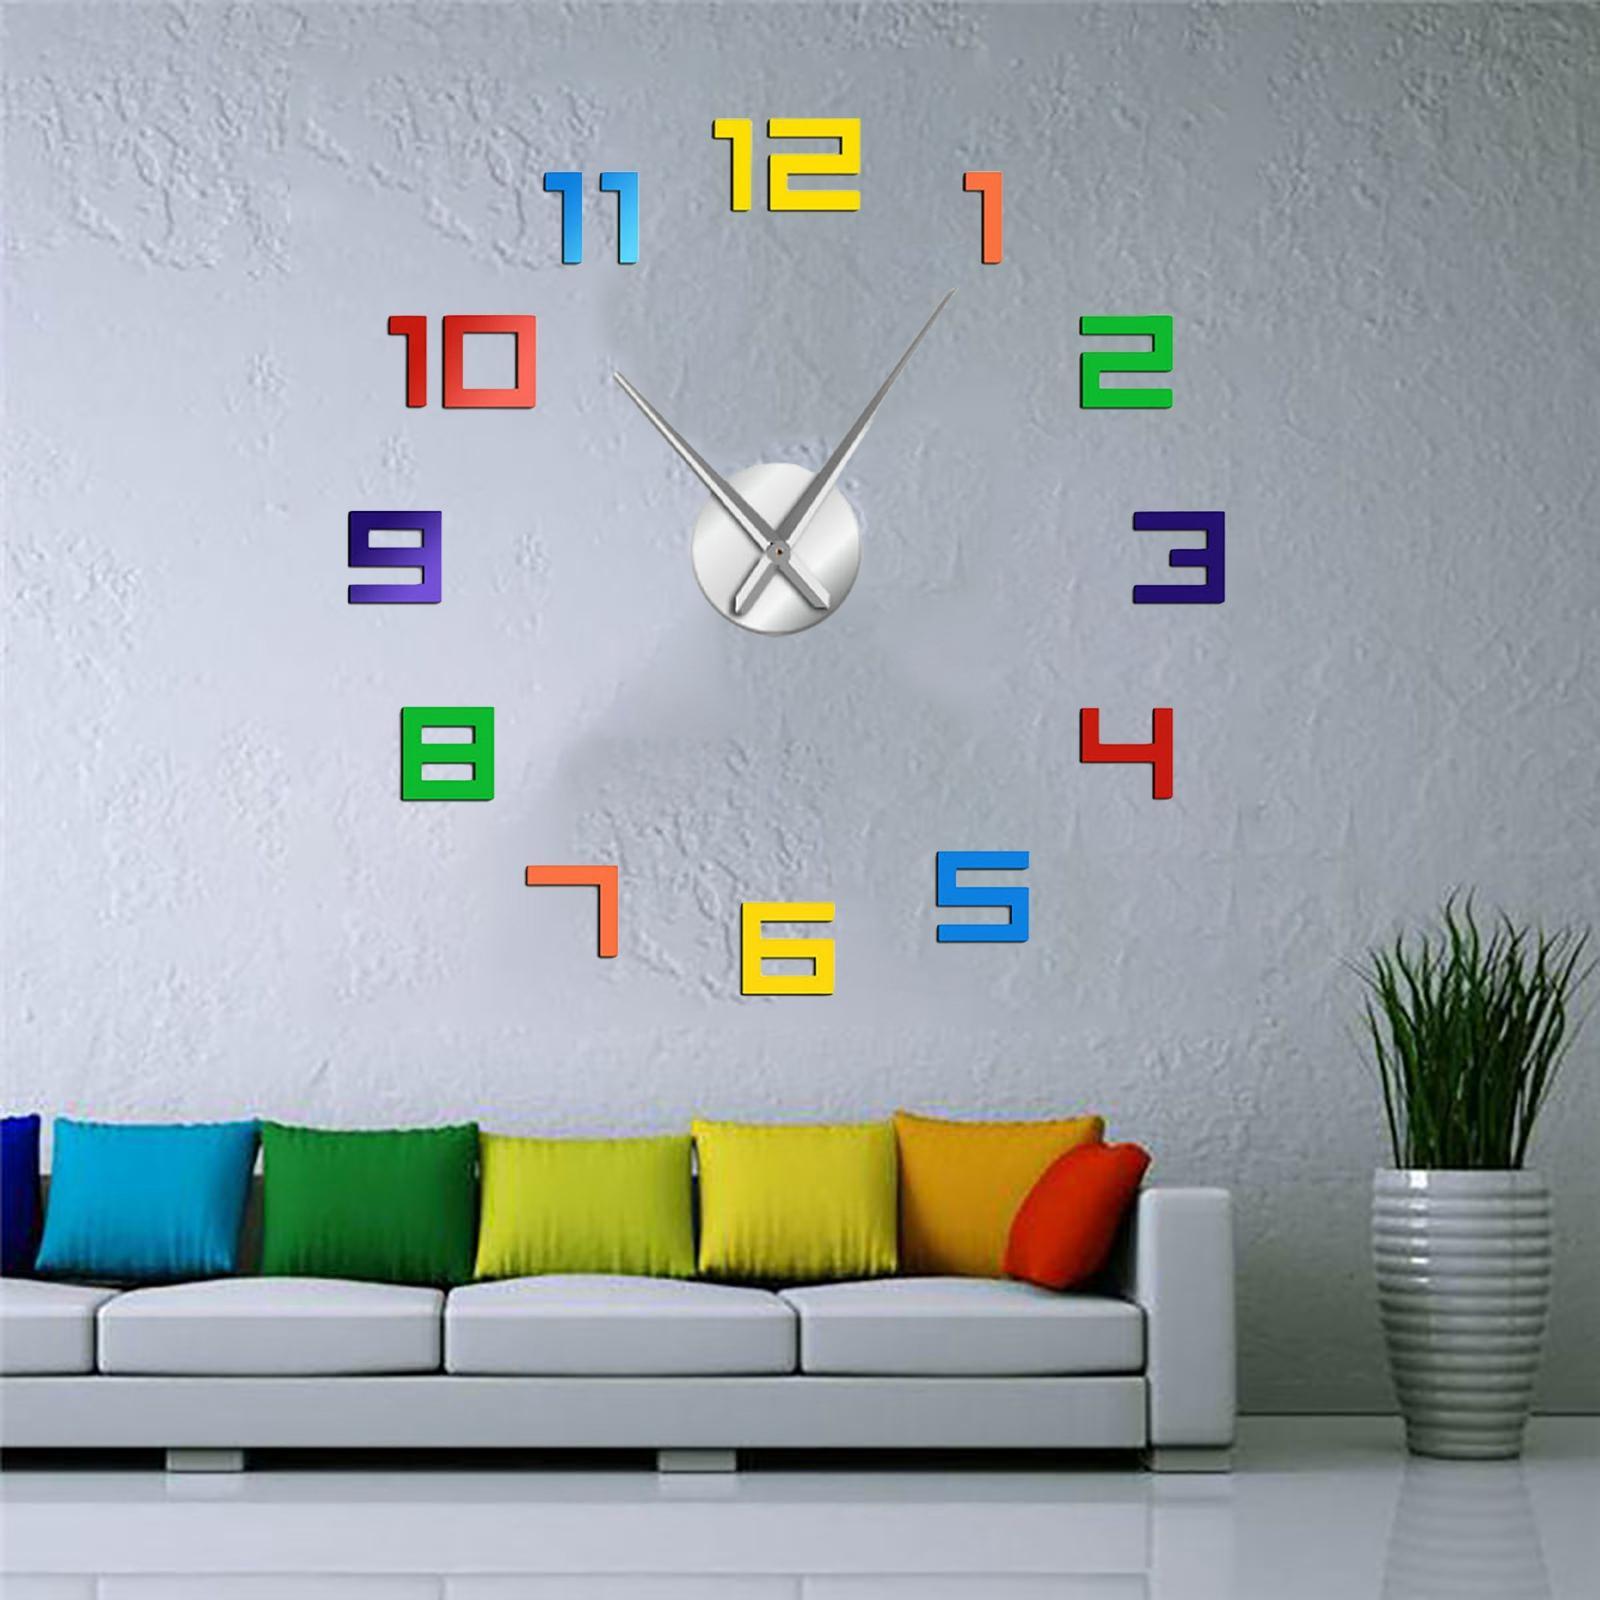 3D DIY Wall Clock Wall Stickers Frameless Decorative Wall Clocks for Office Home Shop